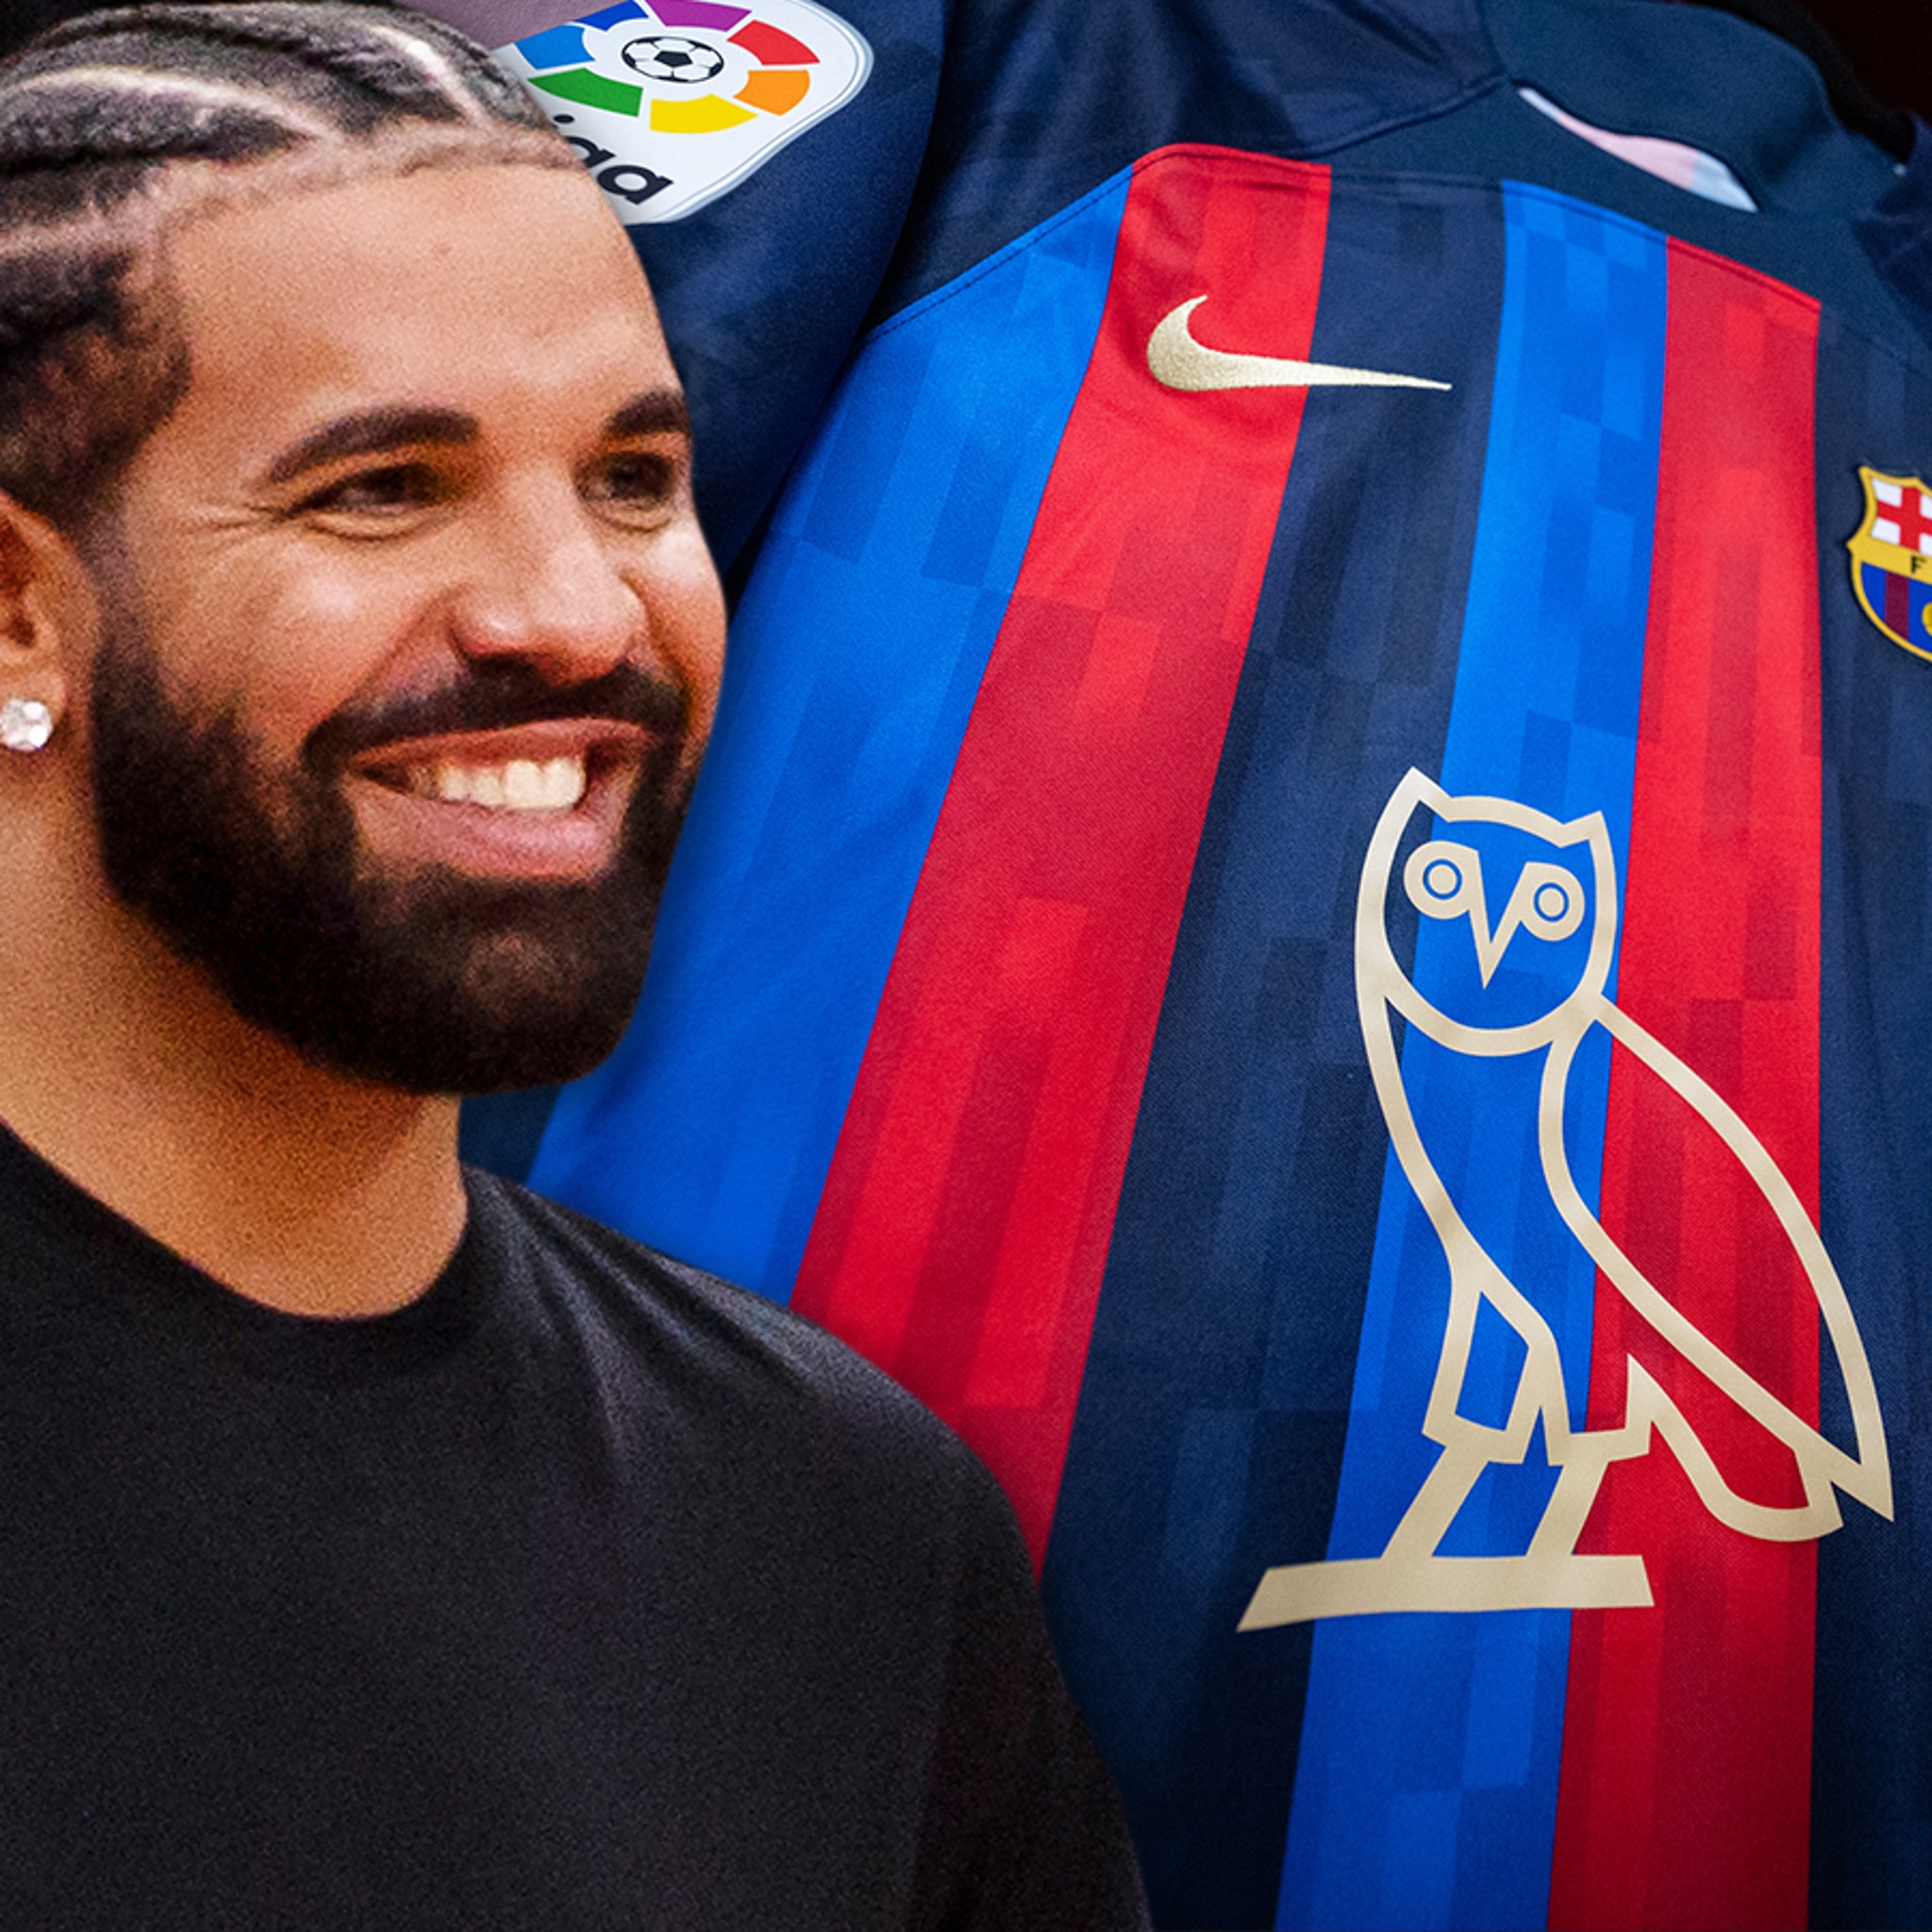 FC Barcelona will wear Drake's OVO owl logo on jerseys for El Clasico